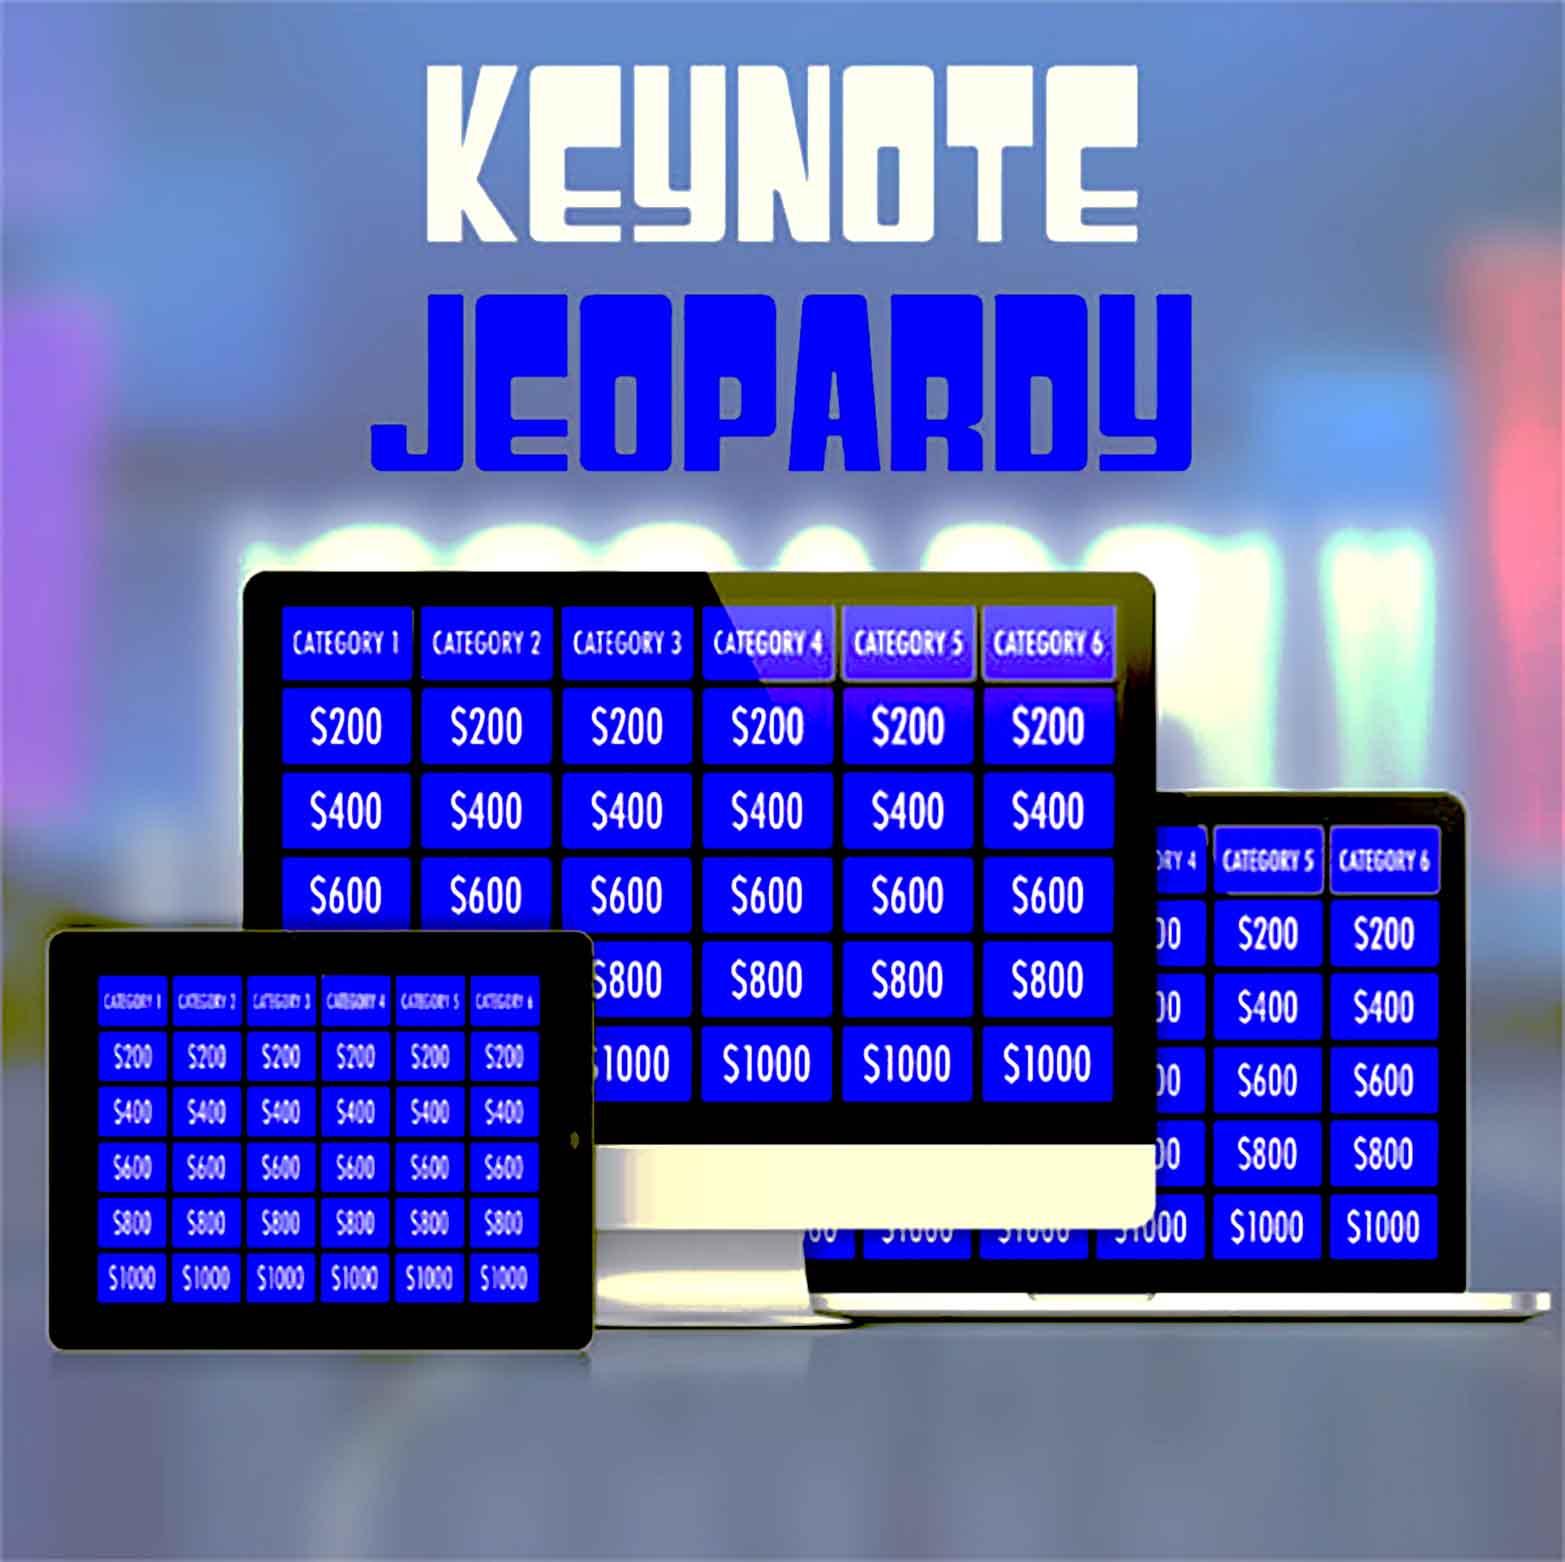 Download Instructions Keynote Jeopardy Template